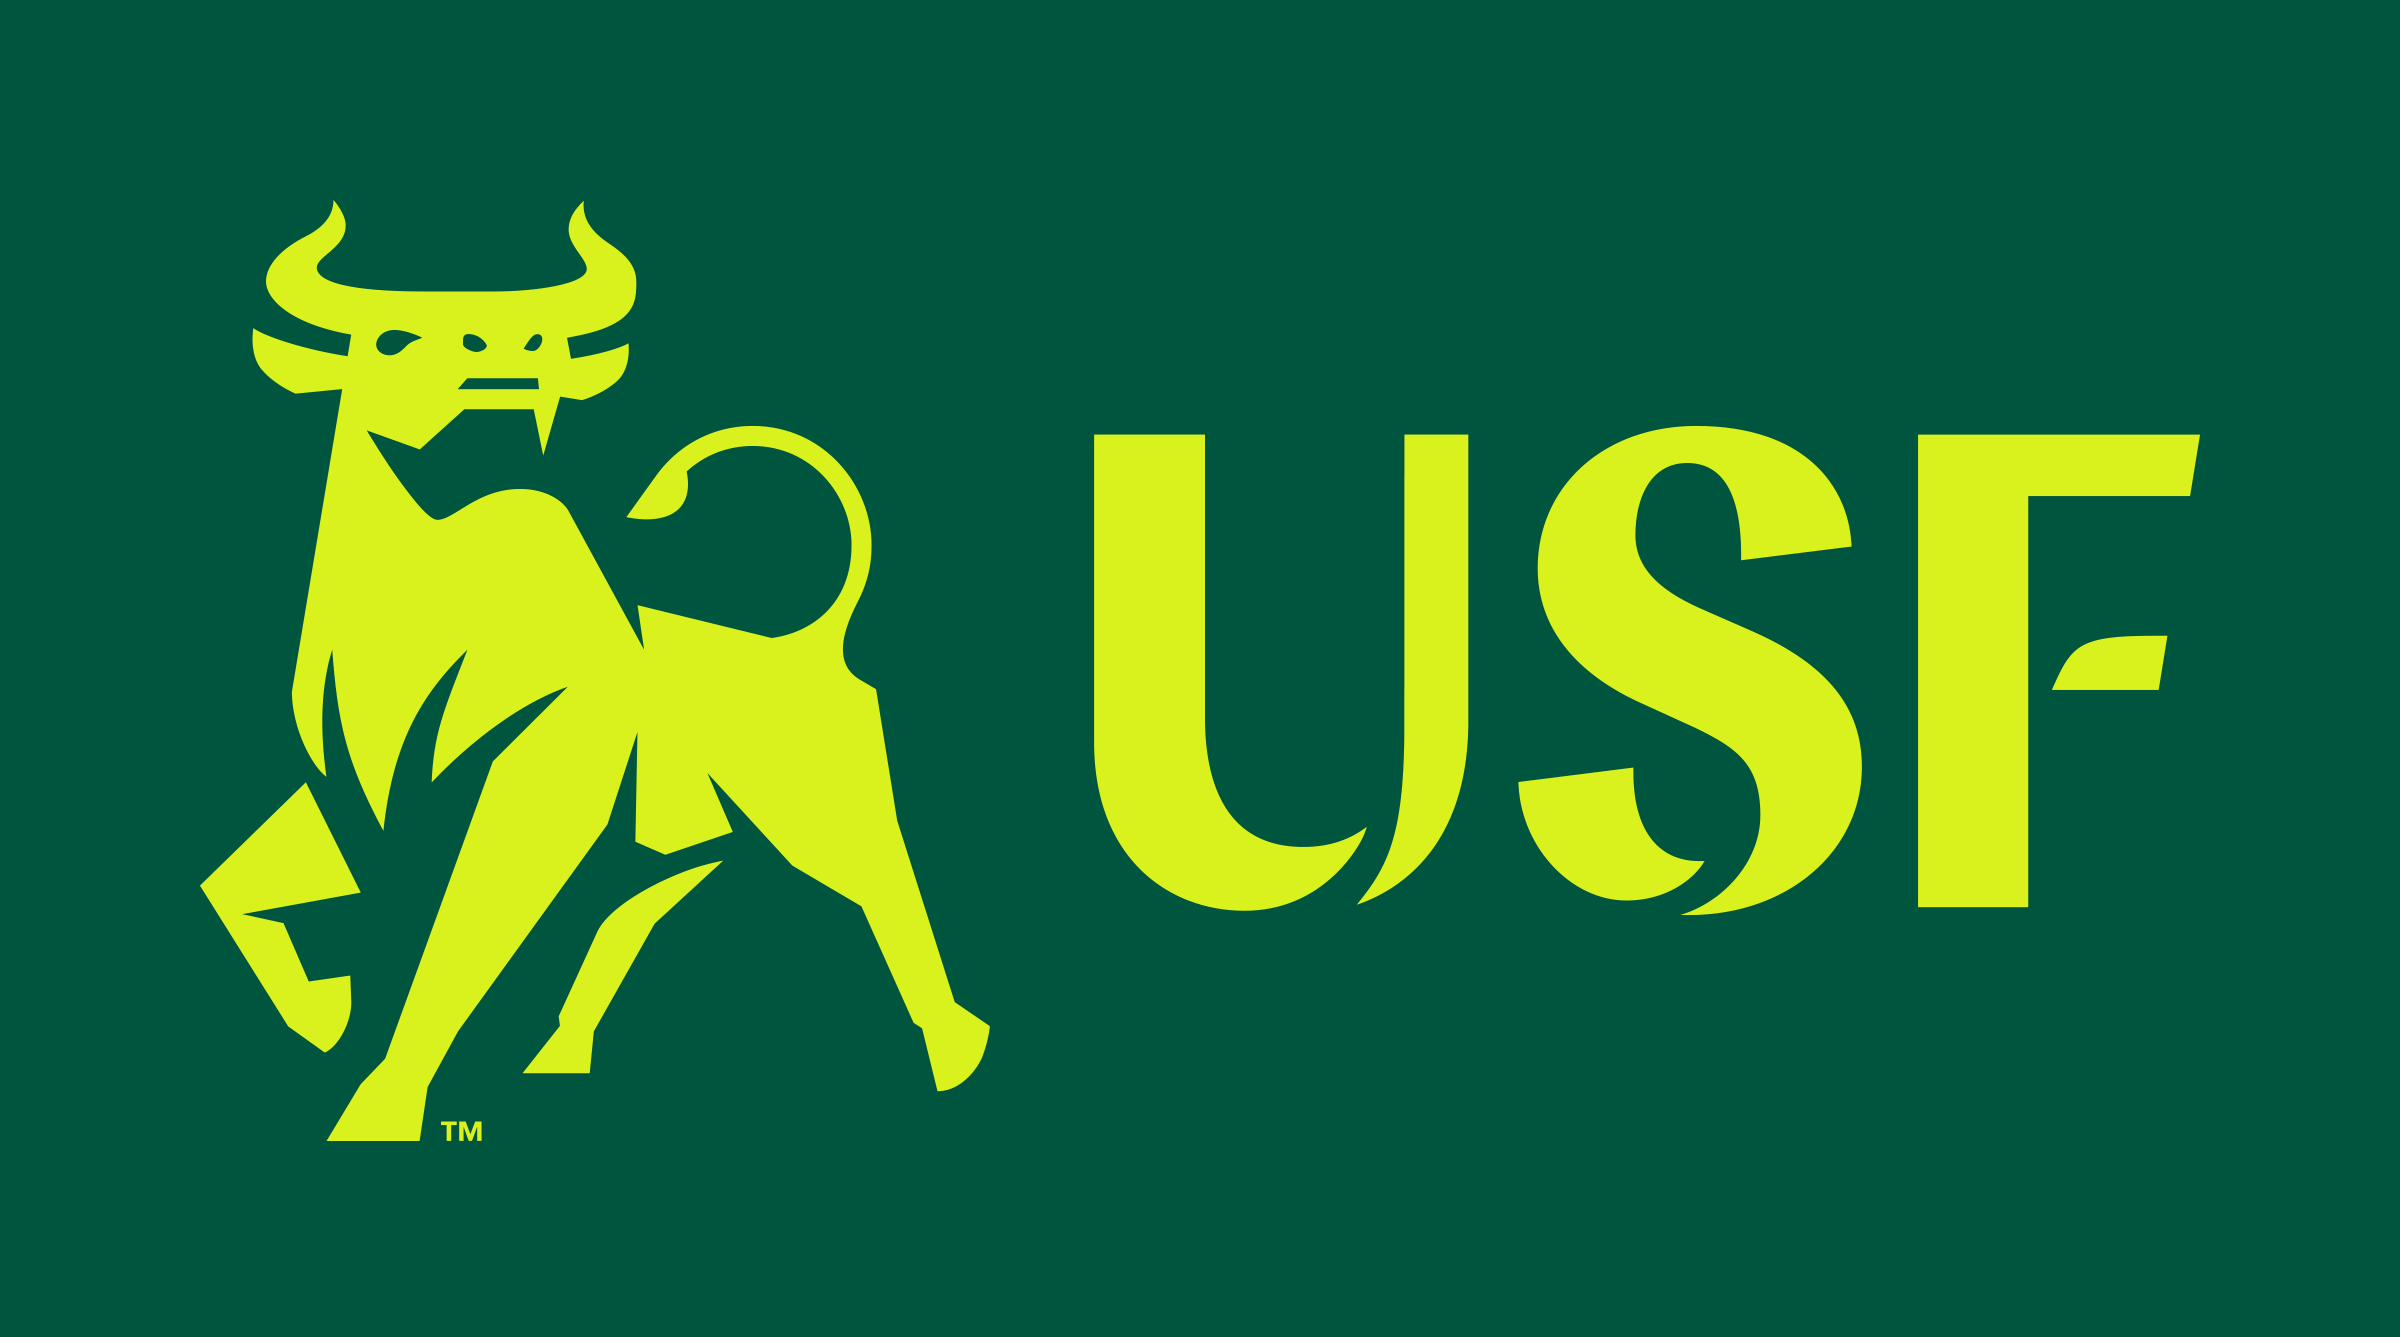 Balanced U Logo - Brand New: New Logo and Identity for University of South Florida